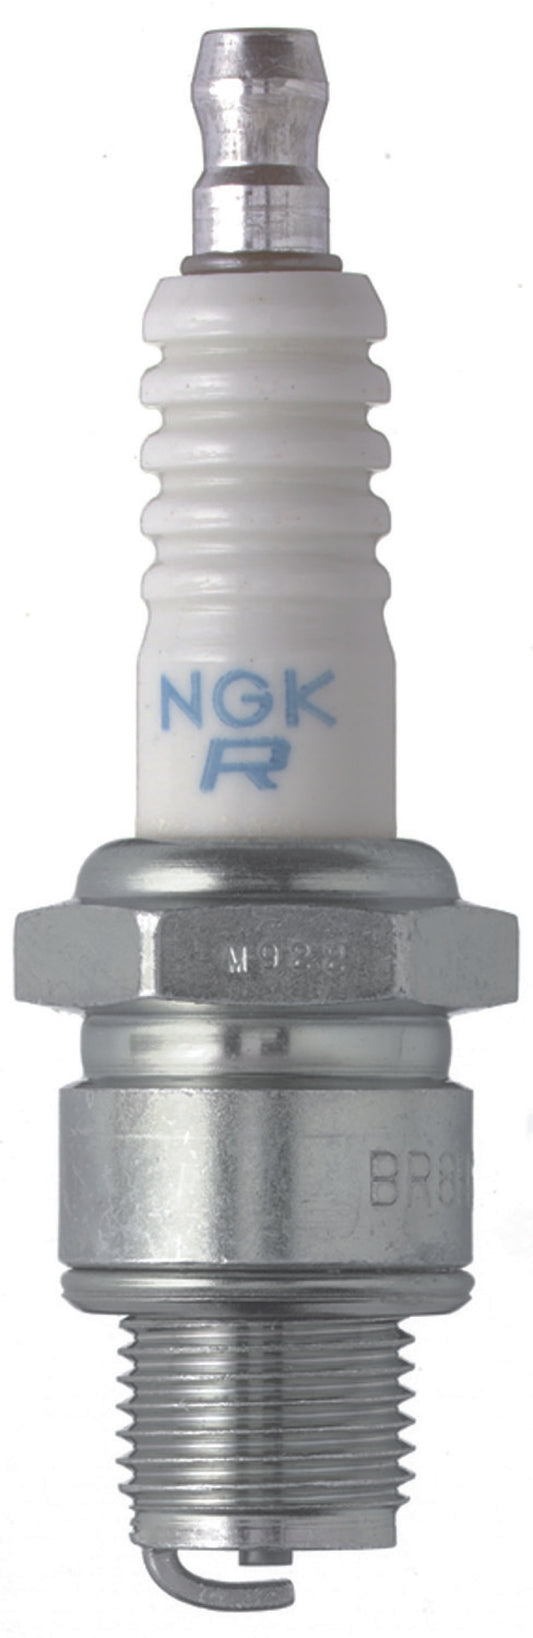 NGK BLYB Spark Plug Box of 6 (BR8HS-10)